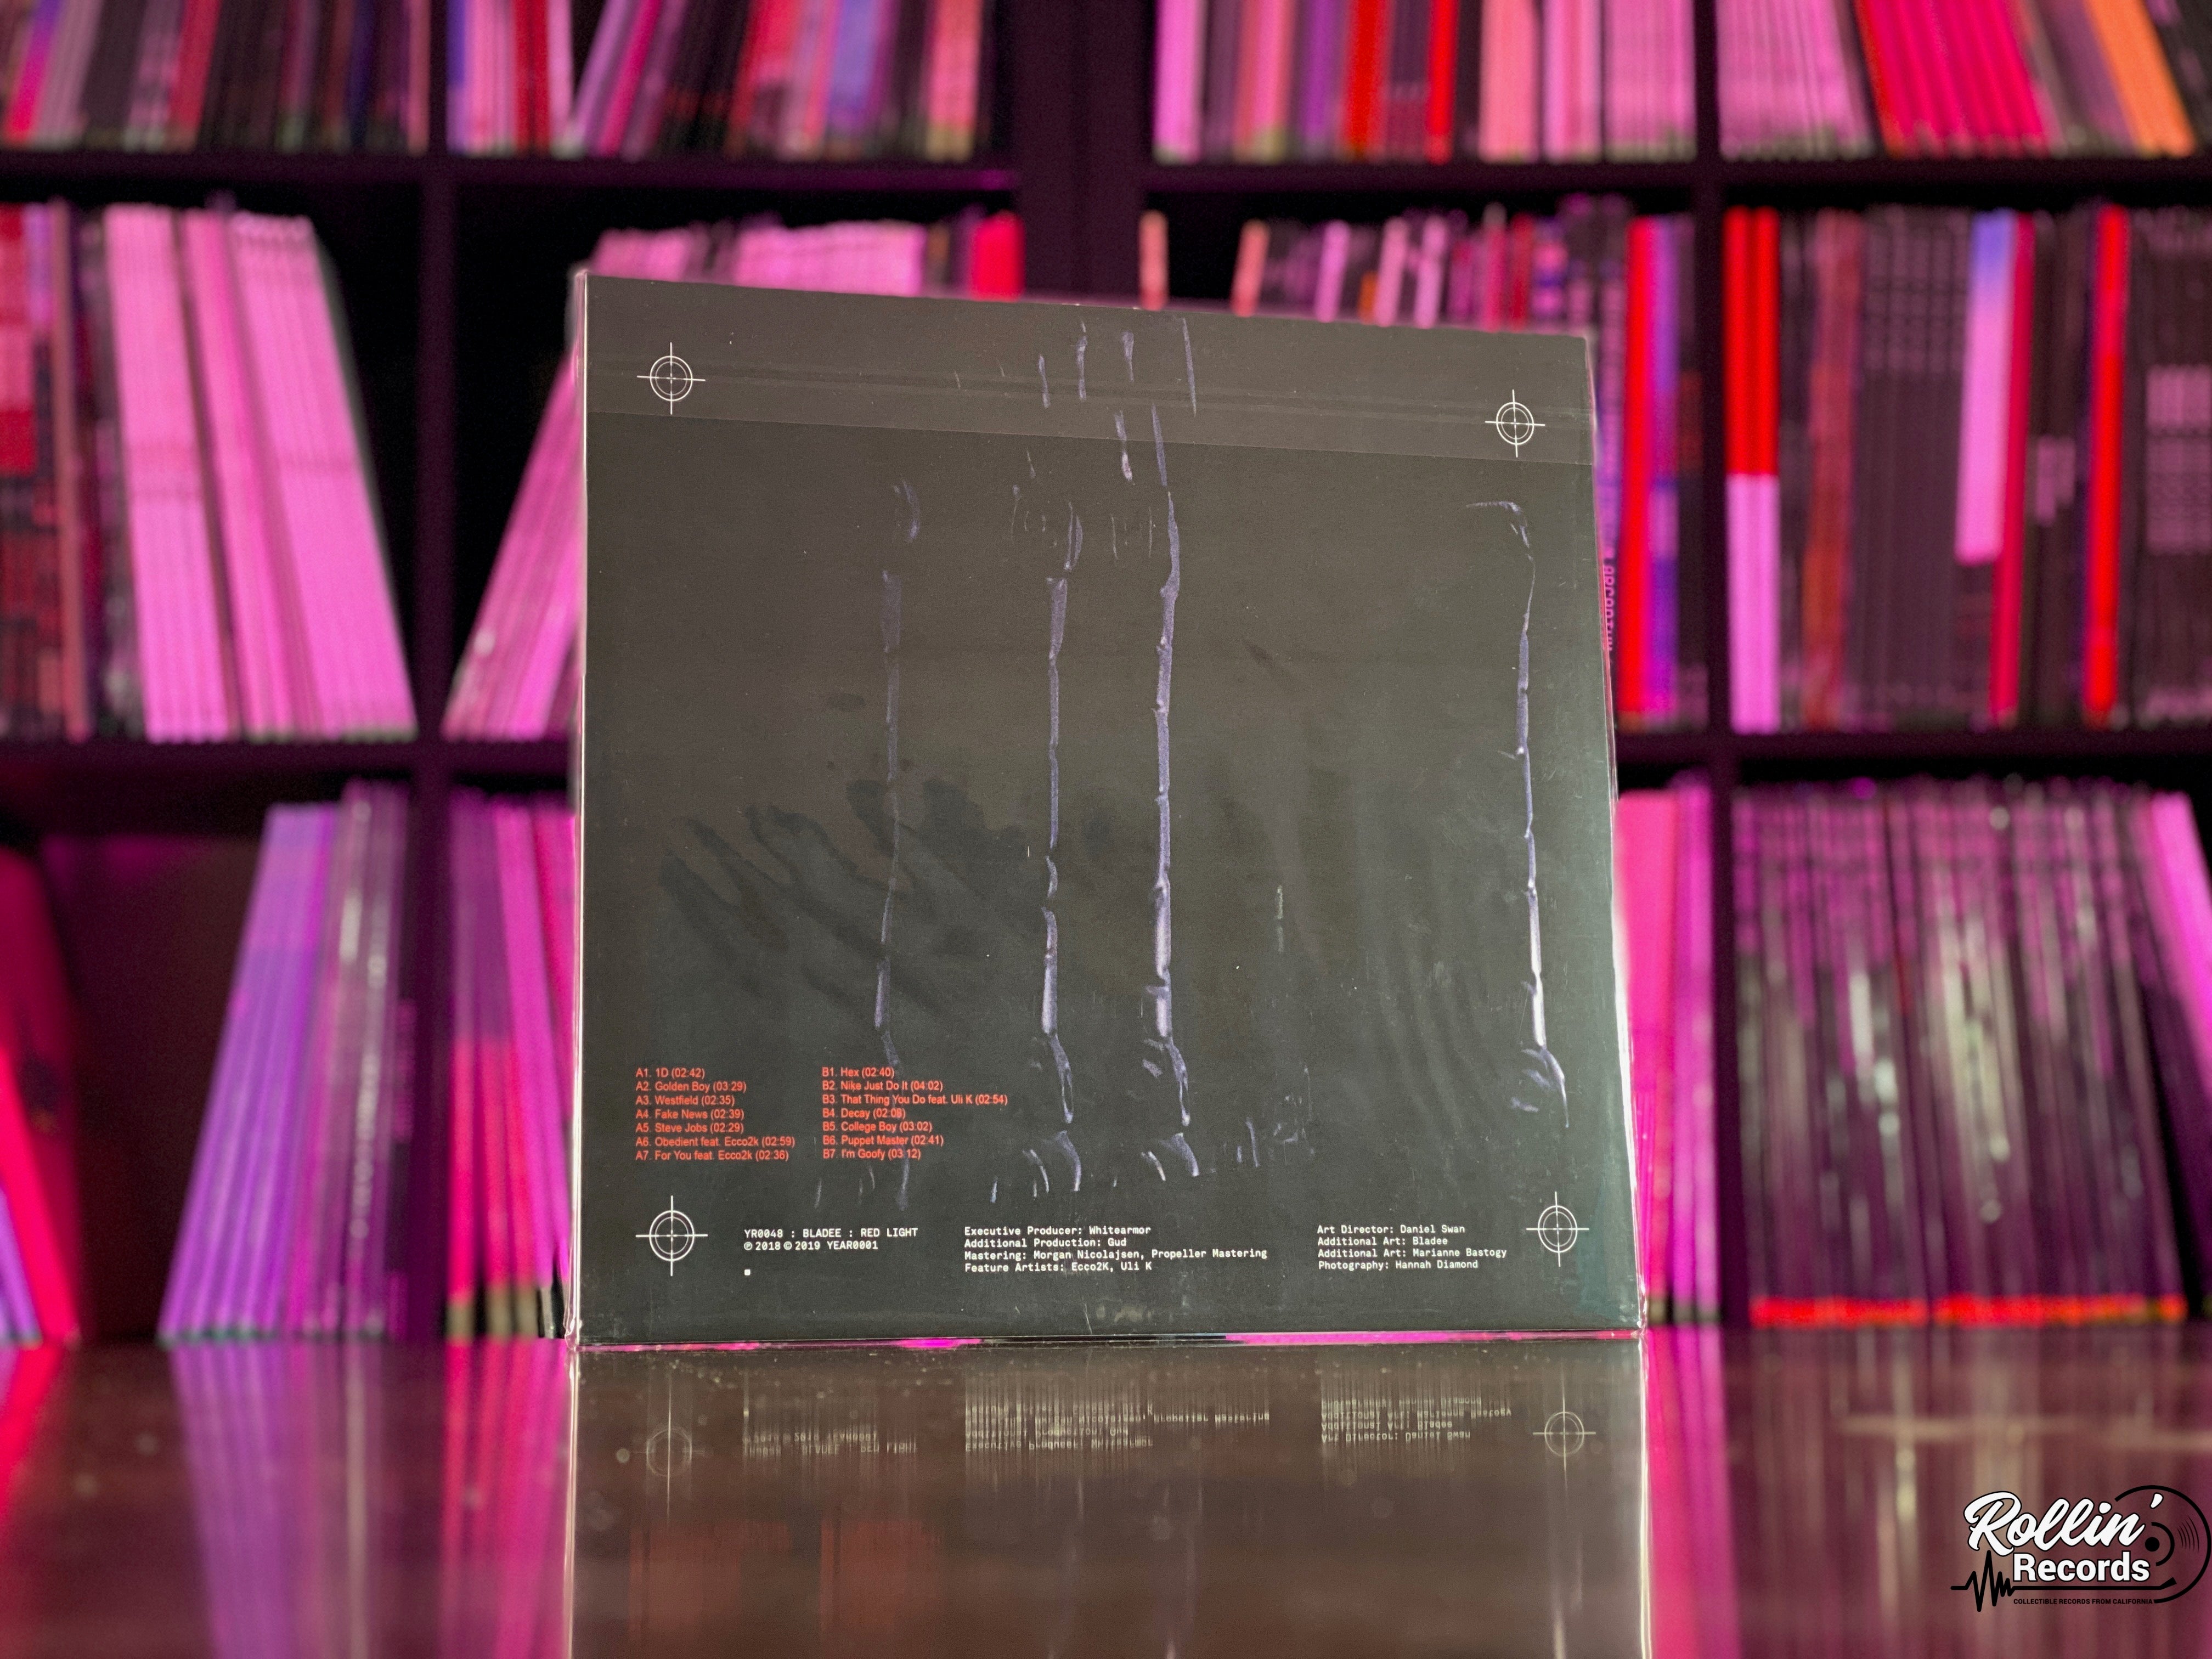 Bladee - Red Light – Rollin' Records